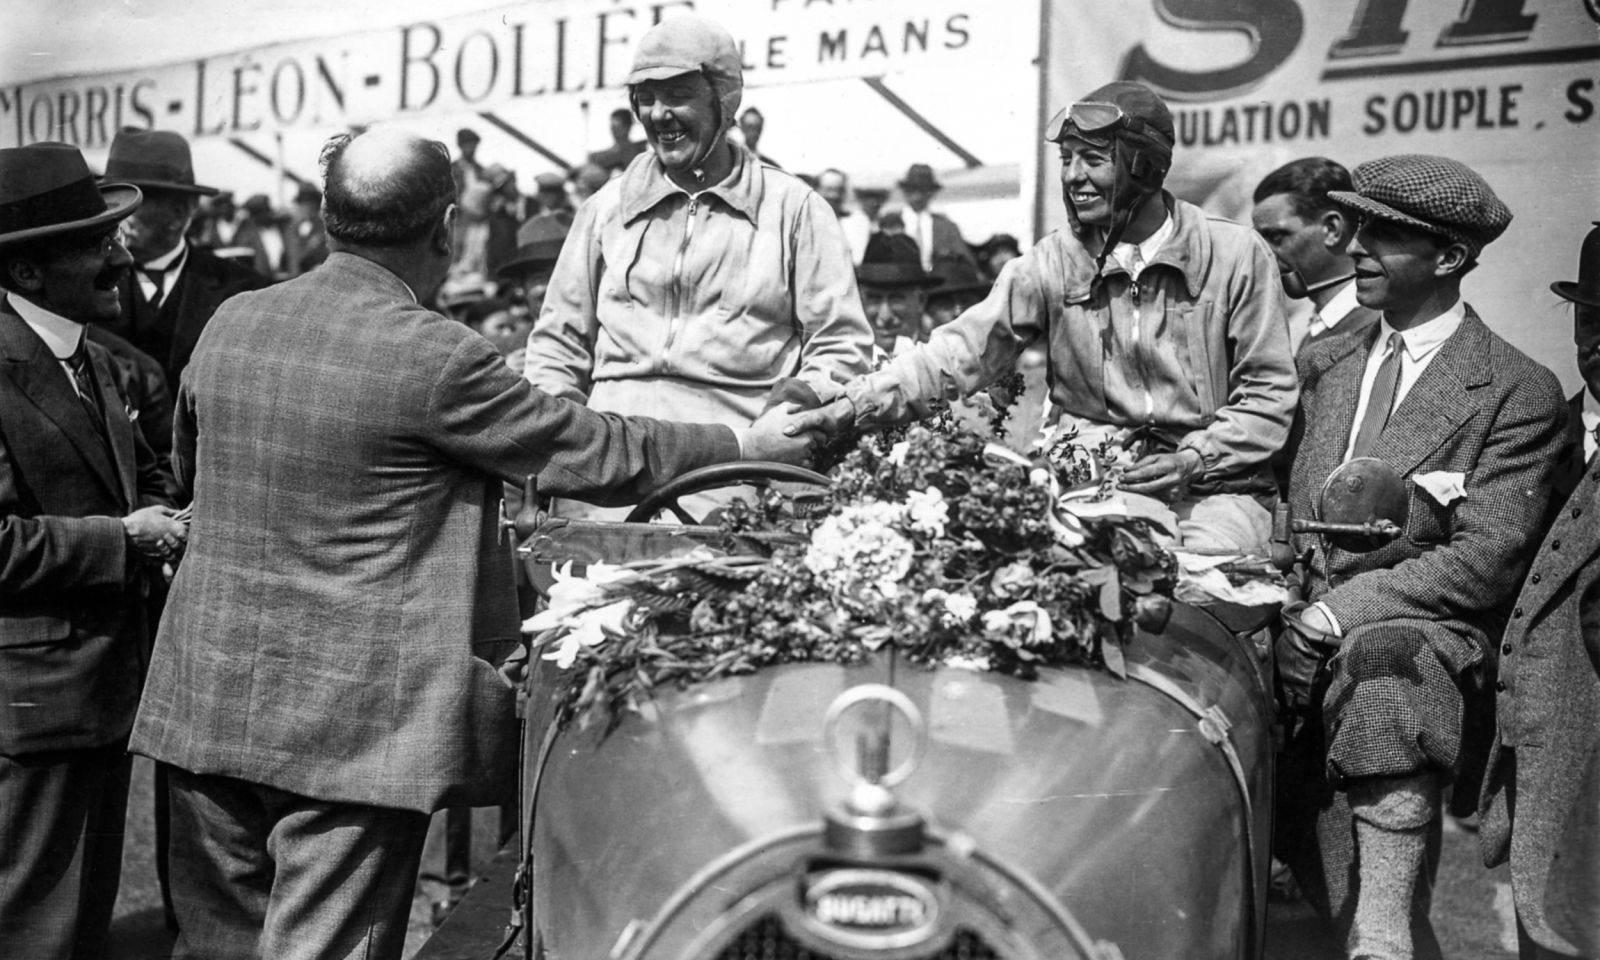 04 BUGATTI Le Mans Centenaire SemanalClásico - Revista online de coches clásicos, de colección y sport - bugatti